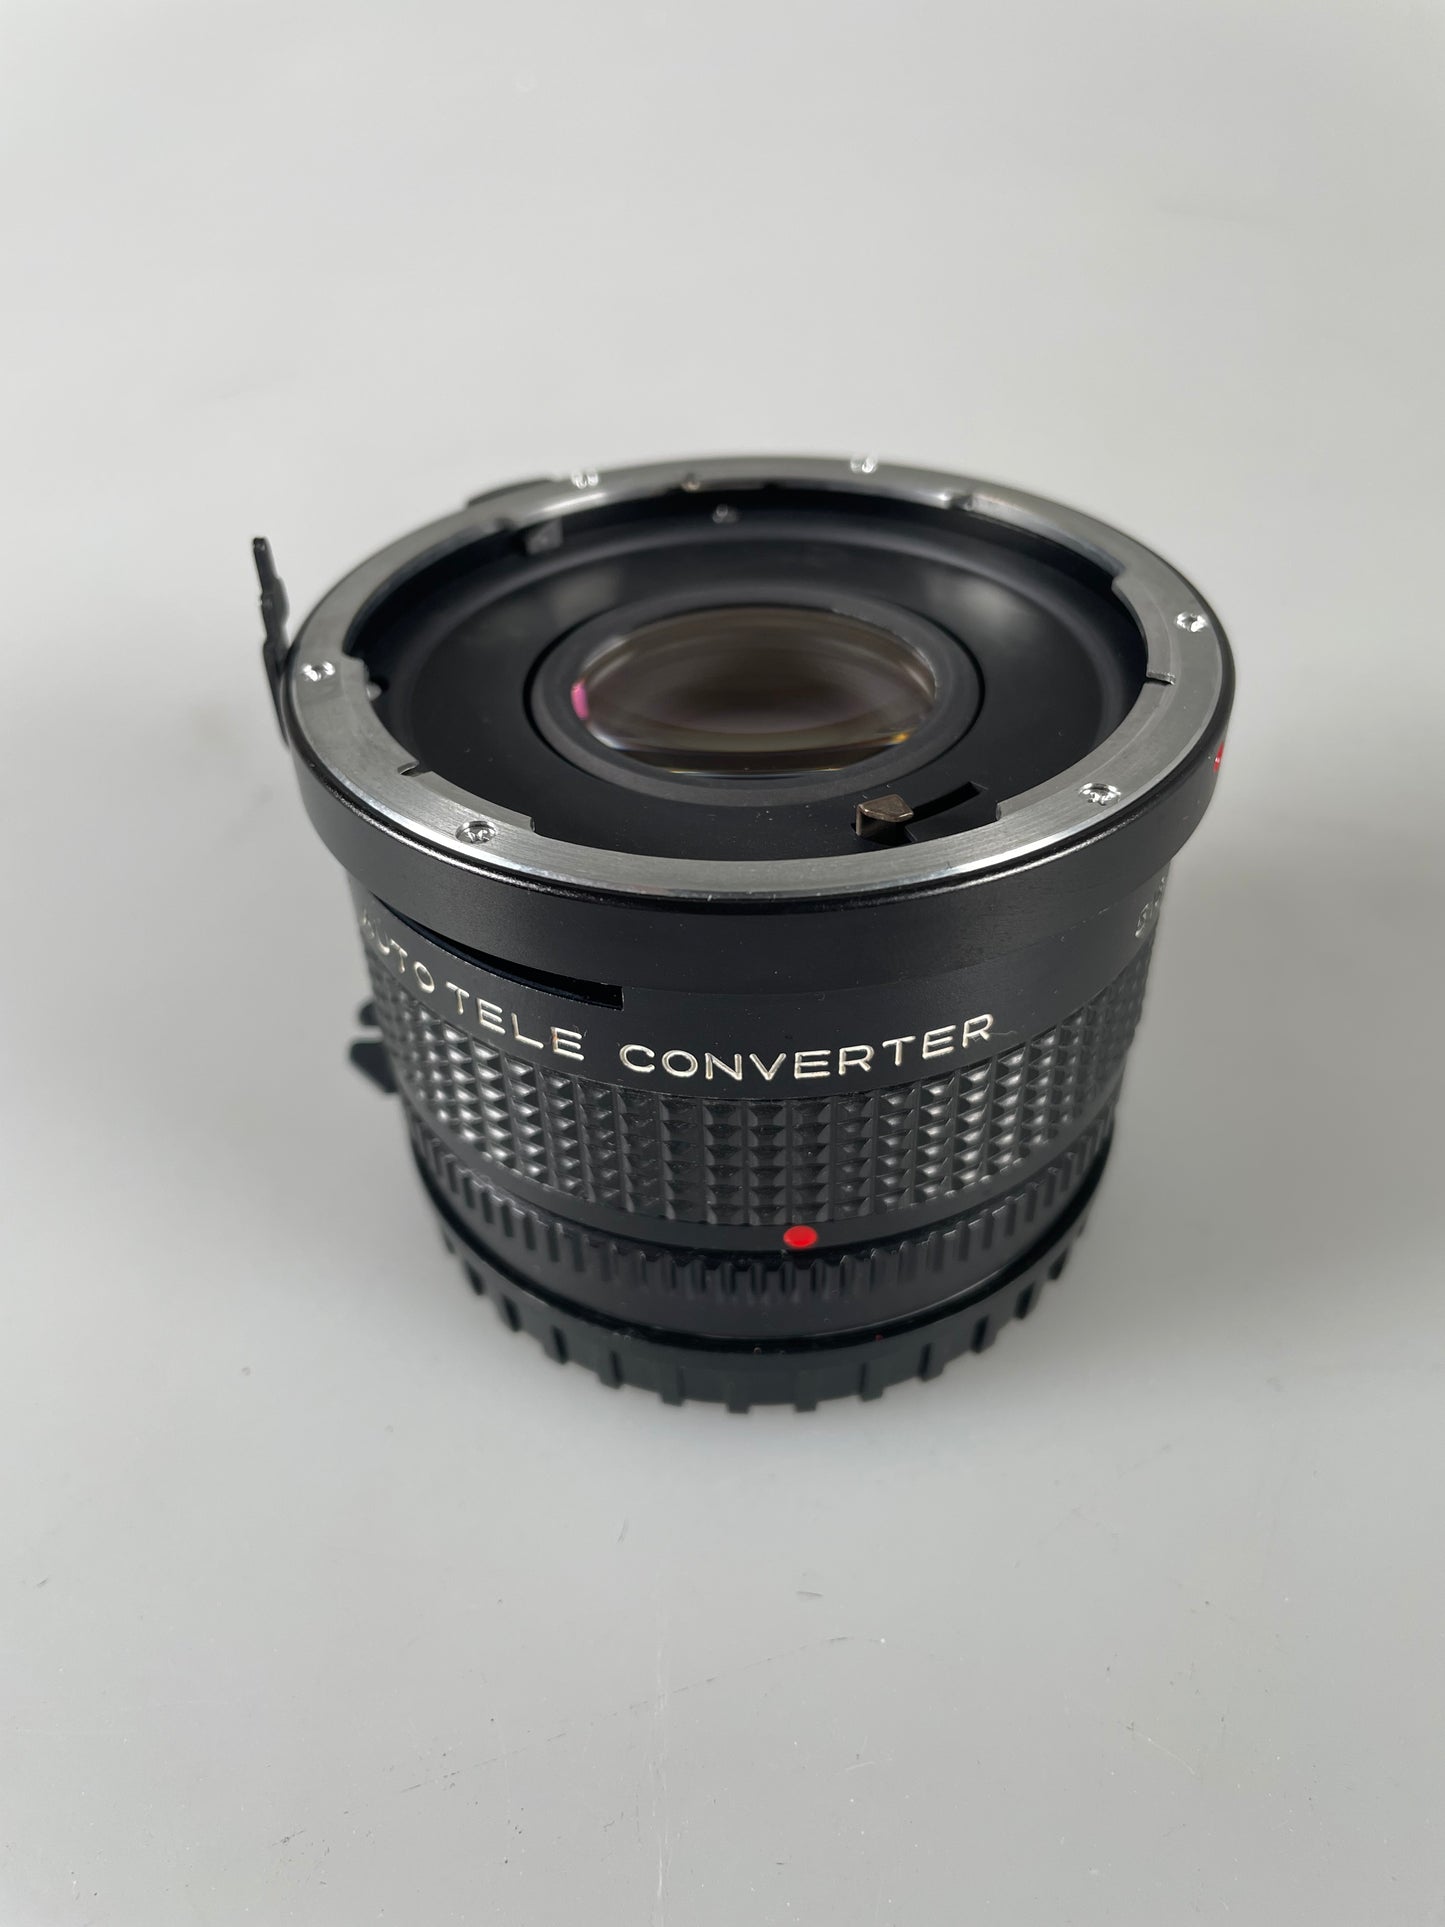 Rokunar 2X Converter for Manual Focus Mamiya 645 Lenses